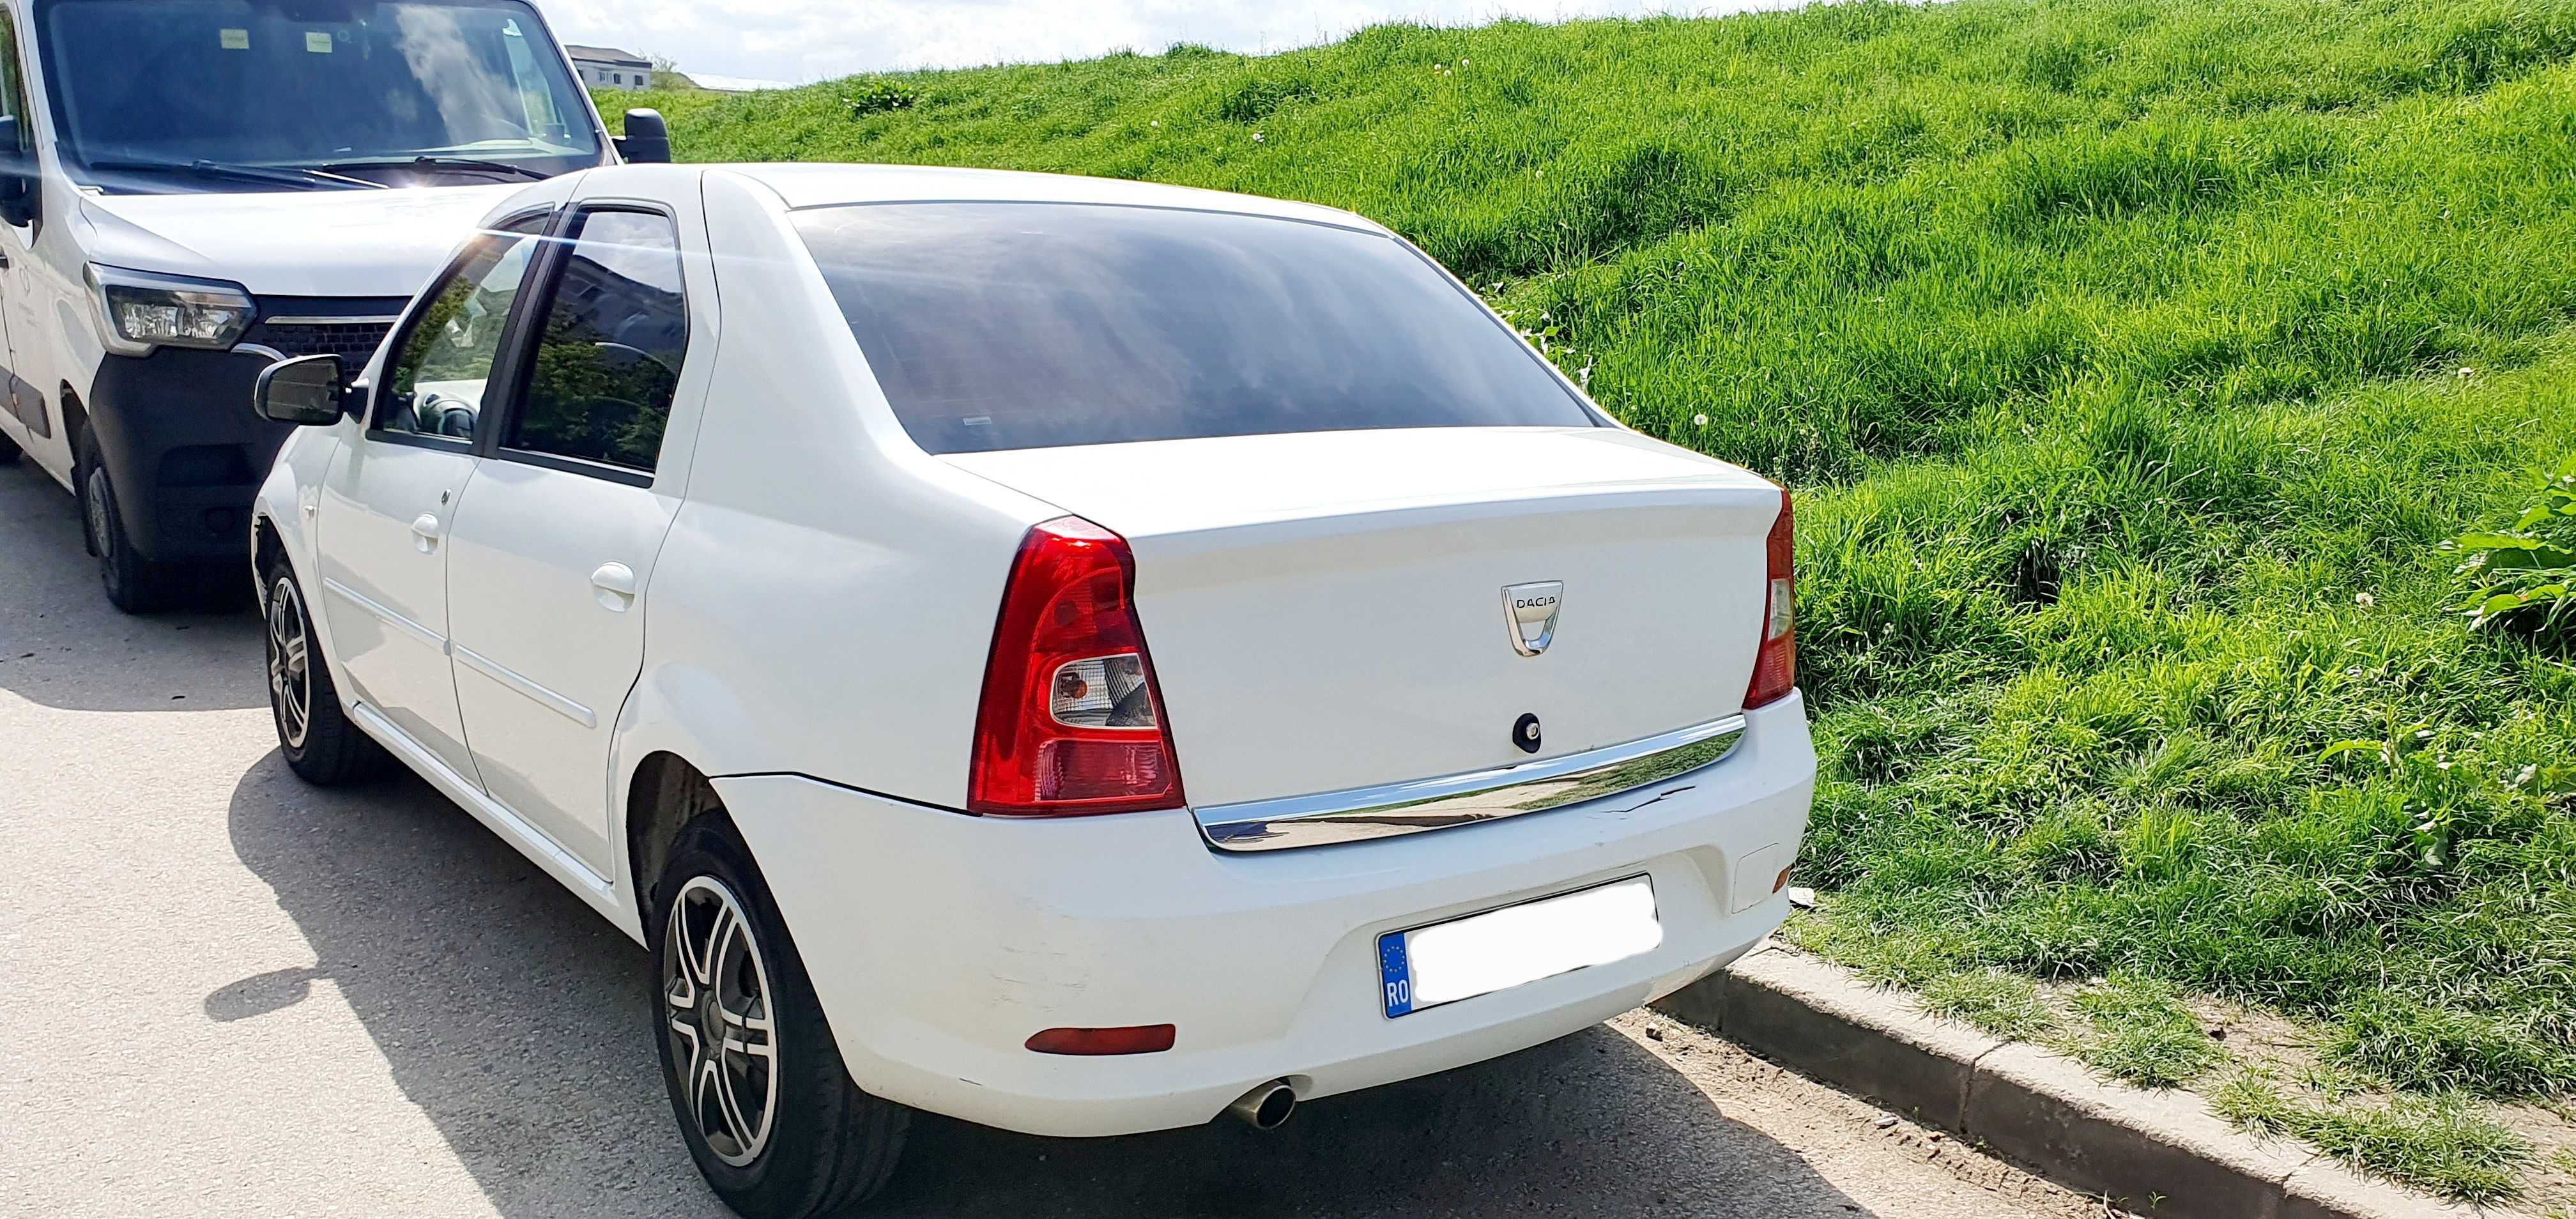 Dacia Logan 1.6 MPI Laureate - primul proprietar